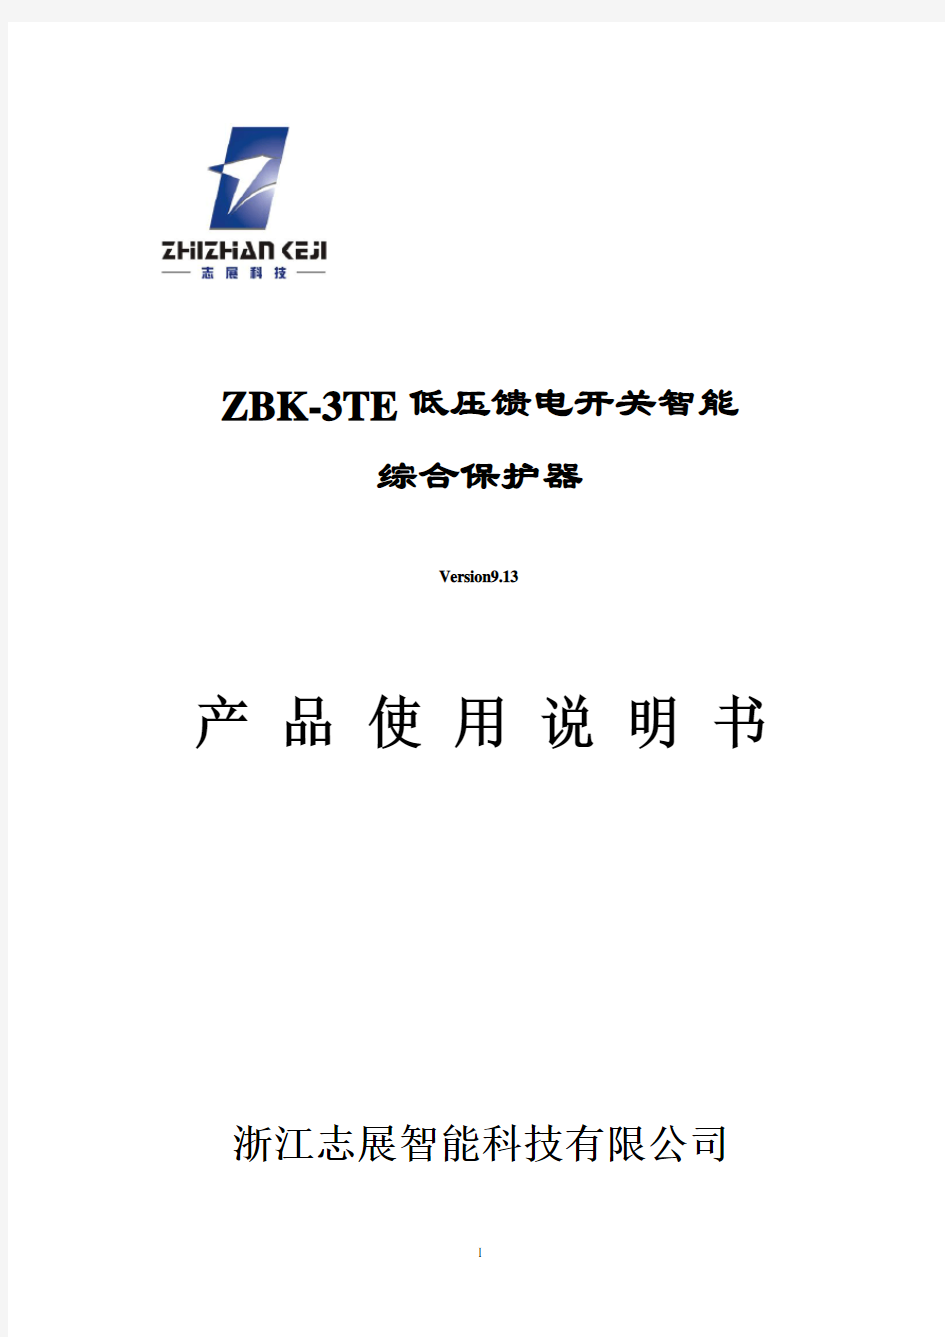 ZBK-3TE低压馈电开关智能综合保护器Version13产品使用说明书